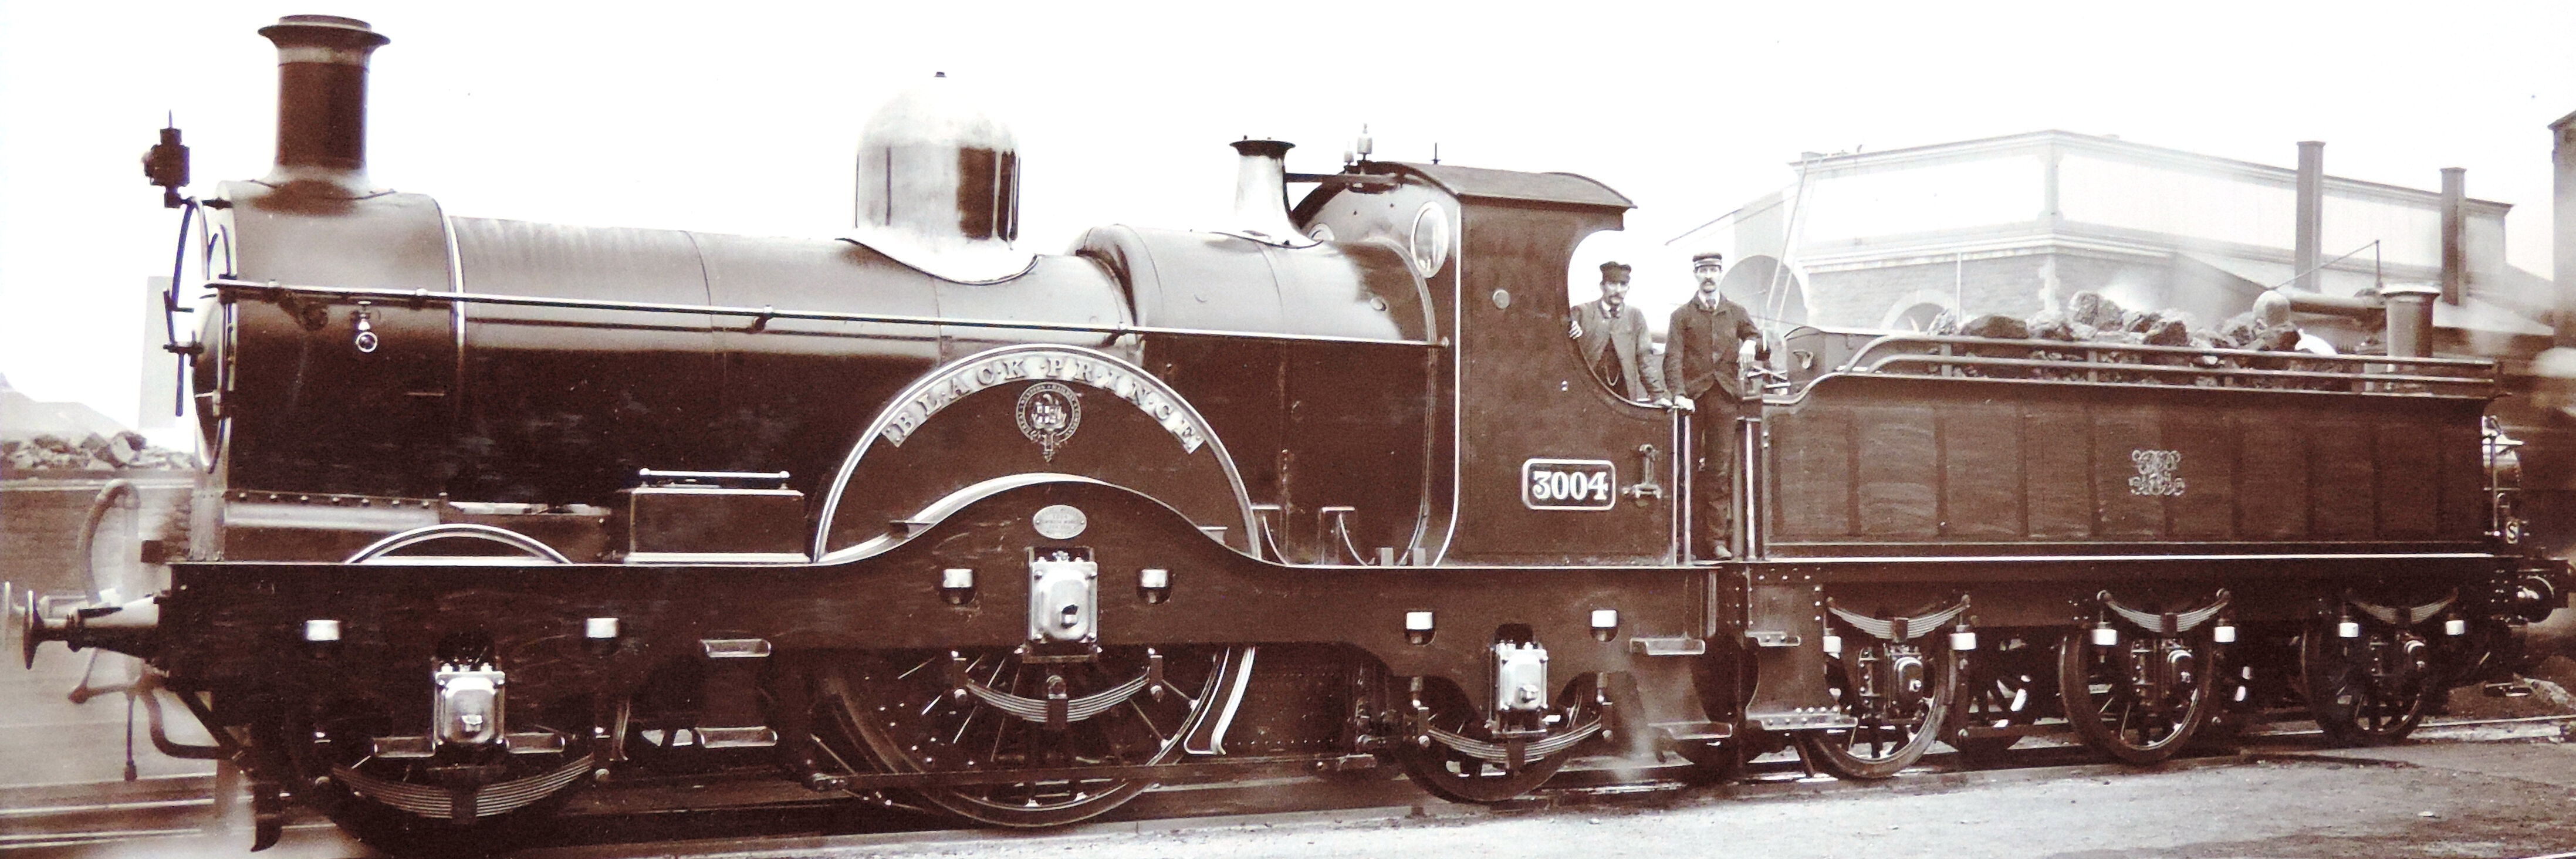 Great Western Railway 3004 Black Prince